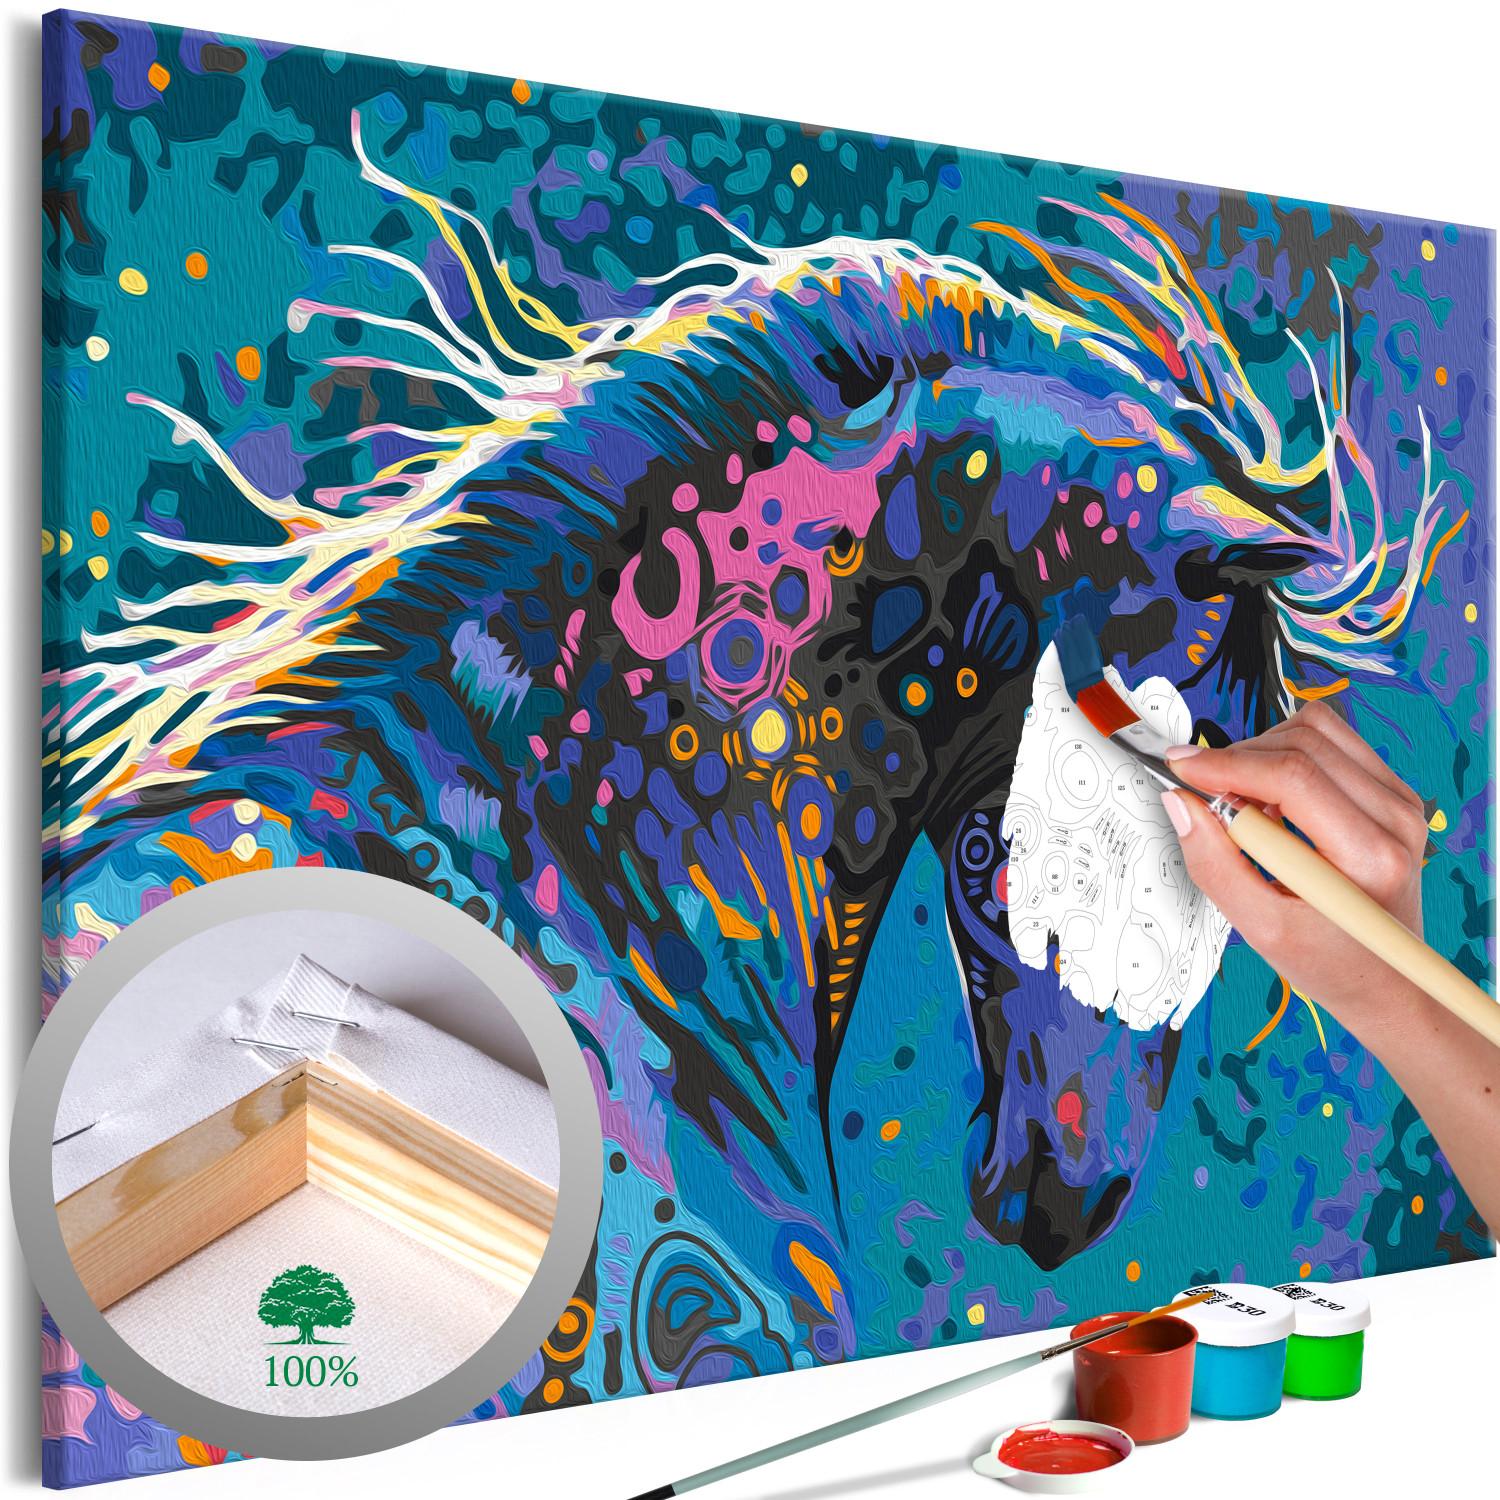 Cuadro para pintar por números Starry Horse - Colorful Animal with Abstract Fur